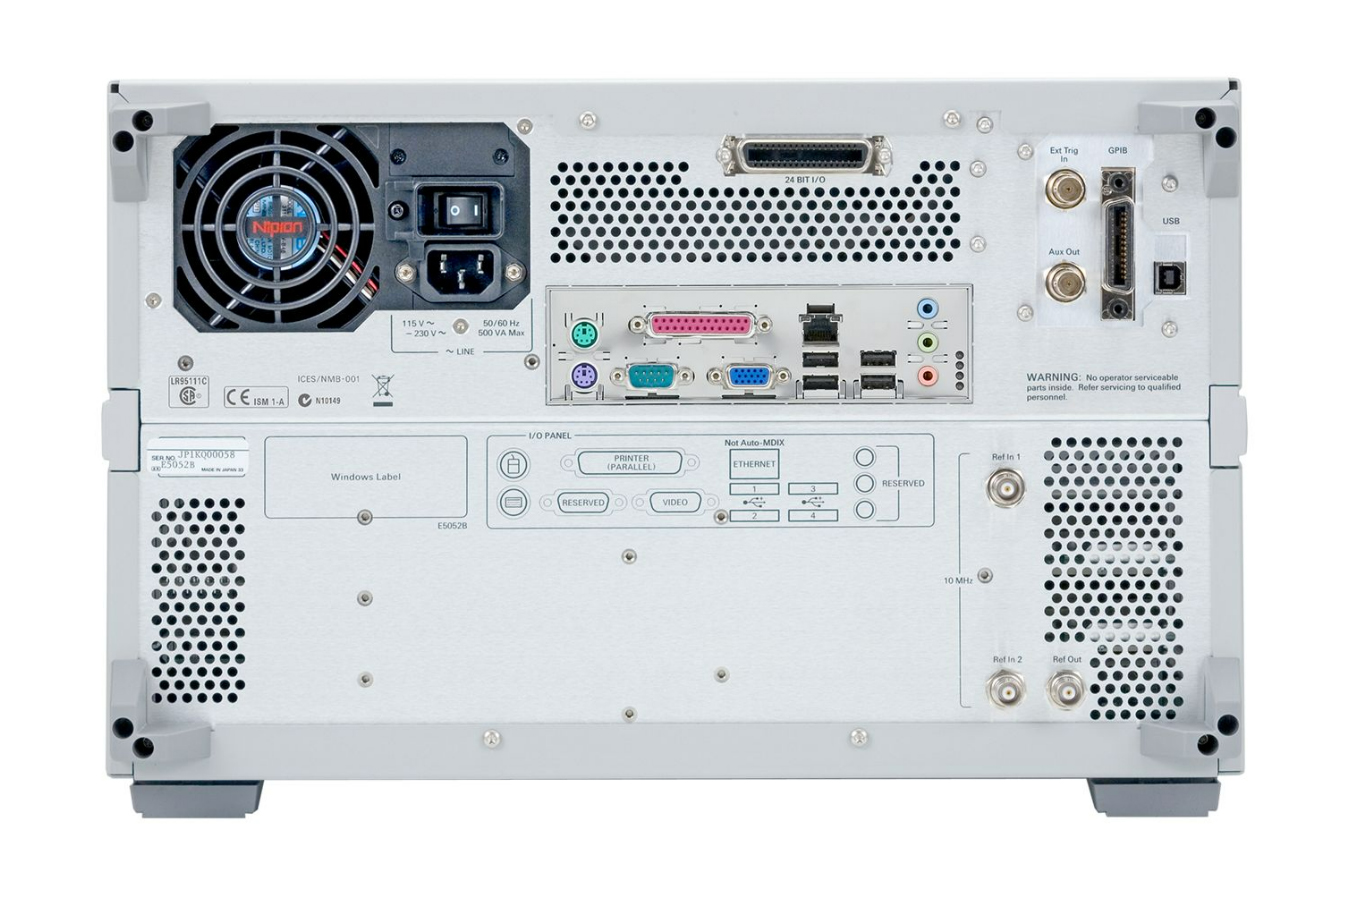 KEYSIGHT E5052B E5052B 信号源分析仪(SSA)